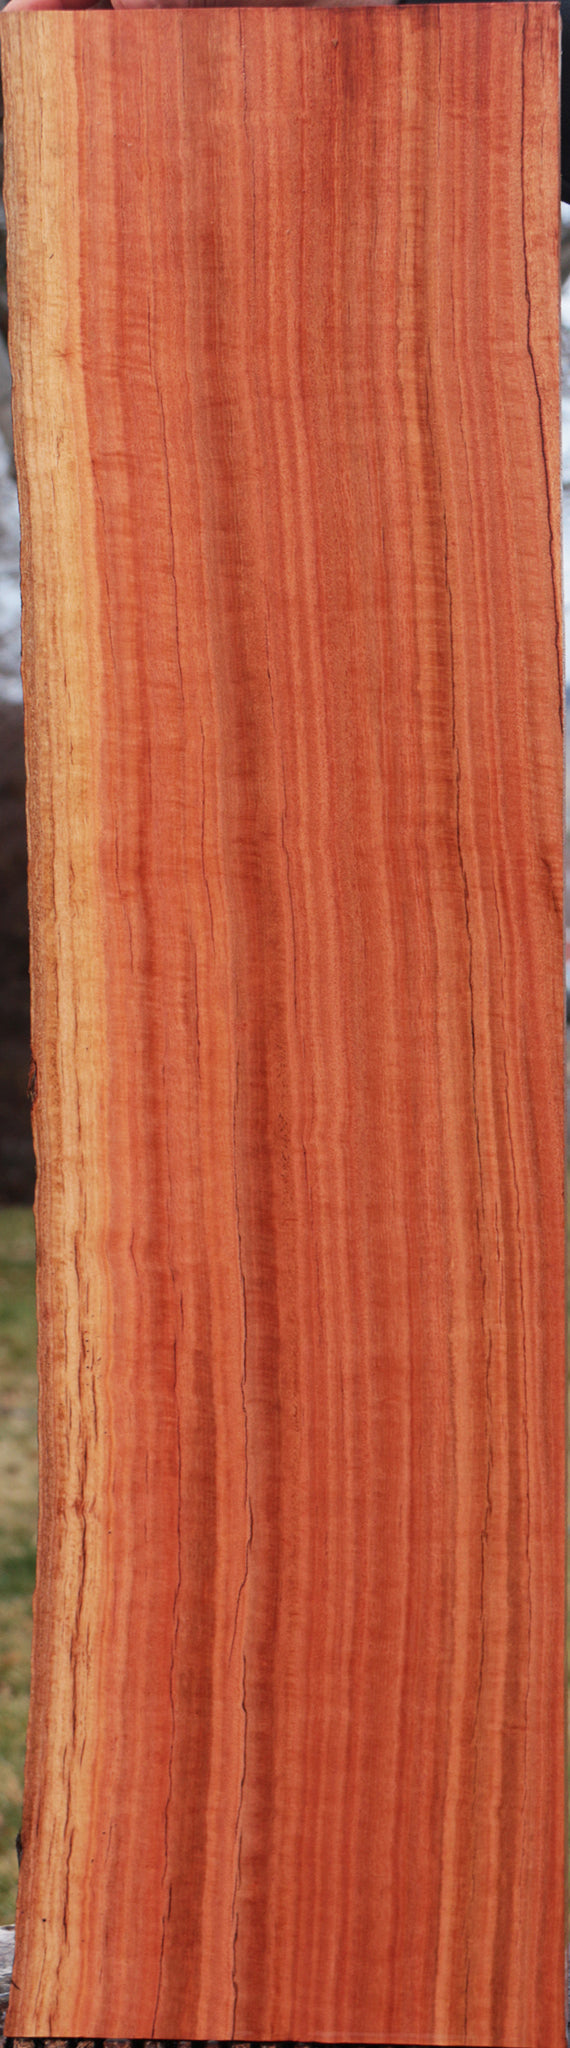 Extra Fancy Red Ironbark Live Edge Lumber